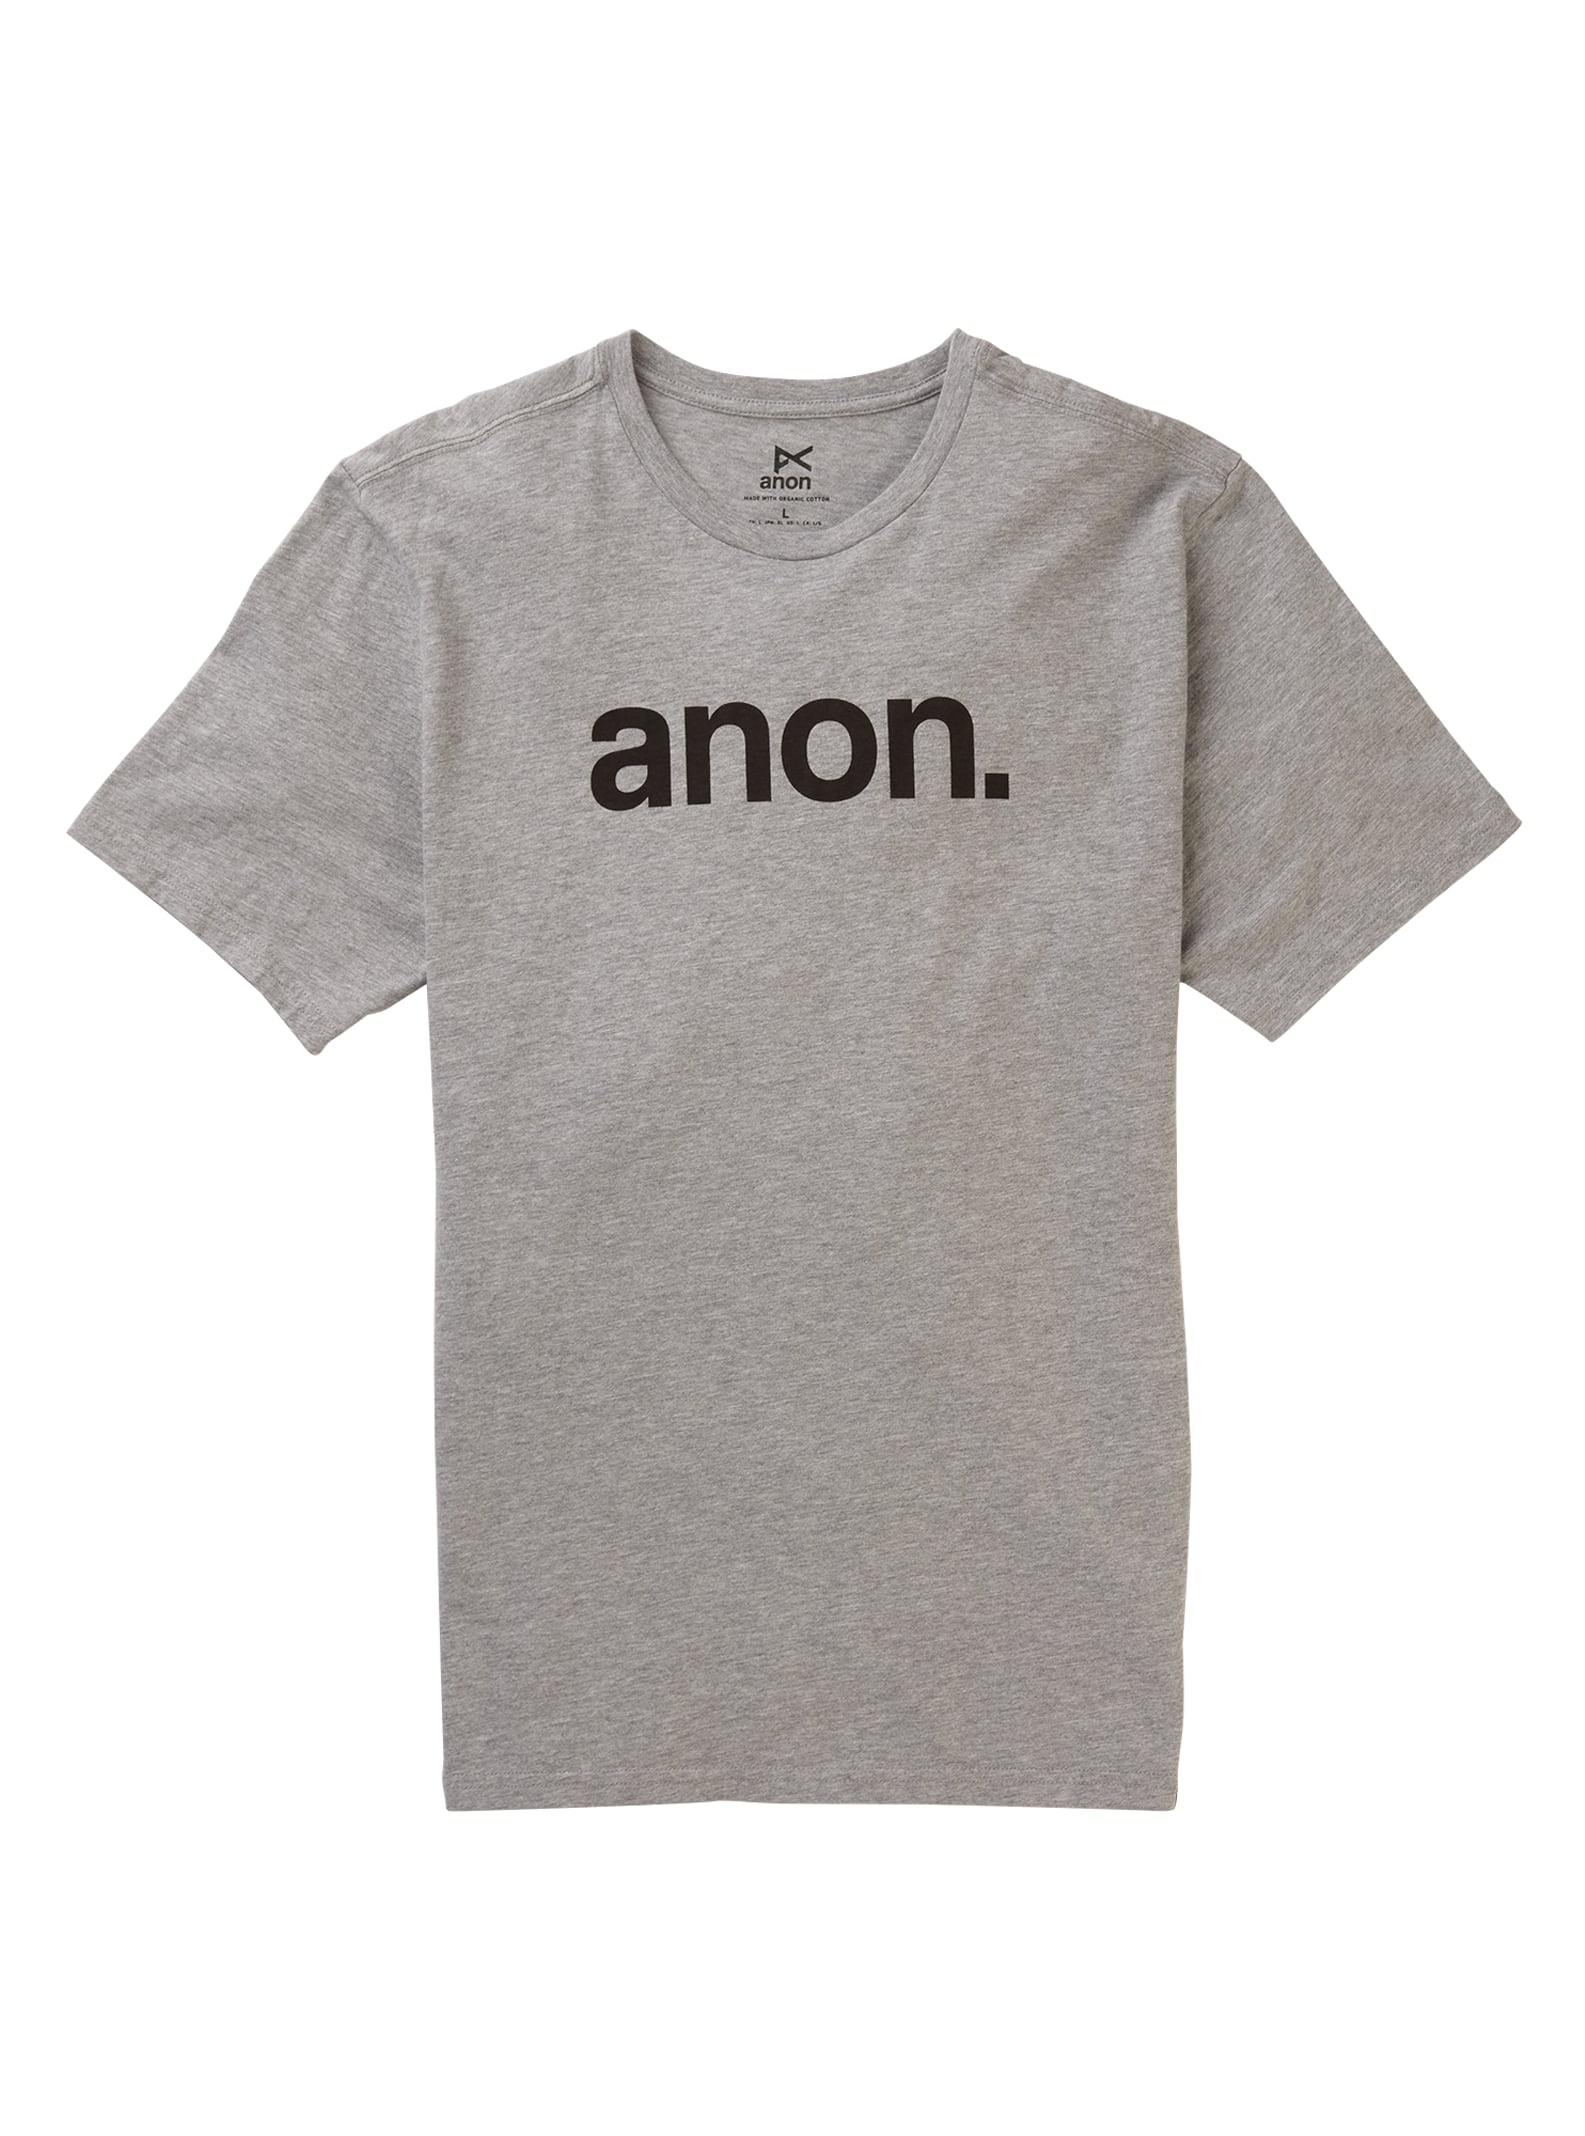 Anon - T-shirt à manches courtes, Gray Heather, XL